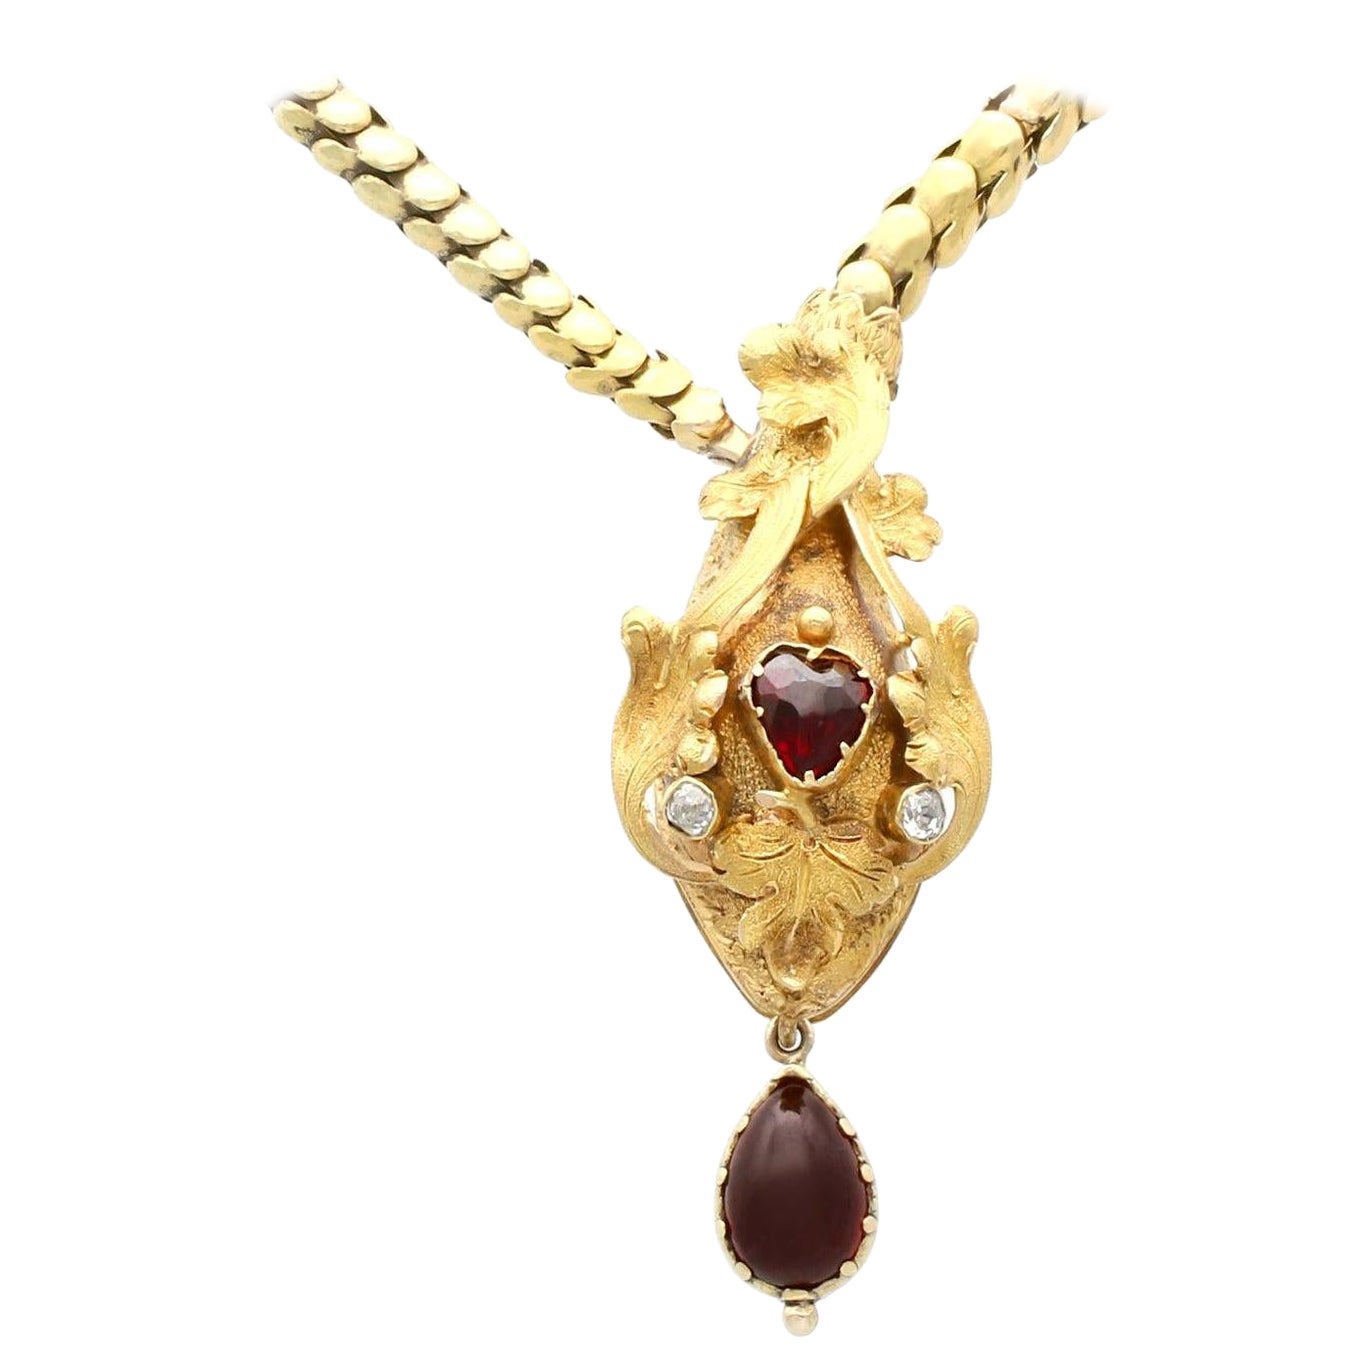 Rose gold Serpenti Viper Necklace with 0.13 ct Diamonds